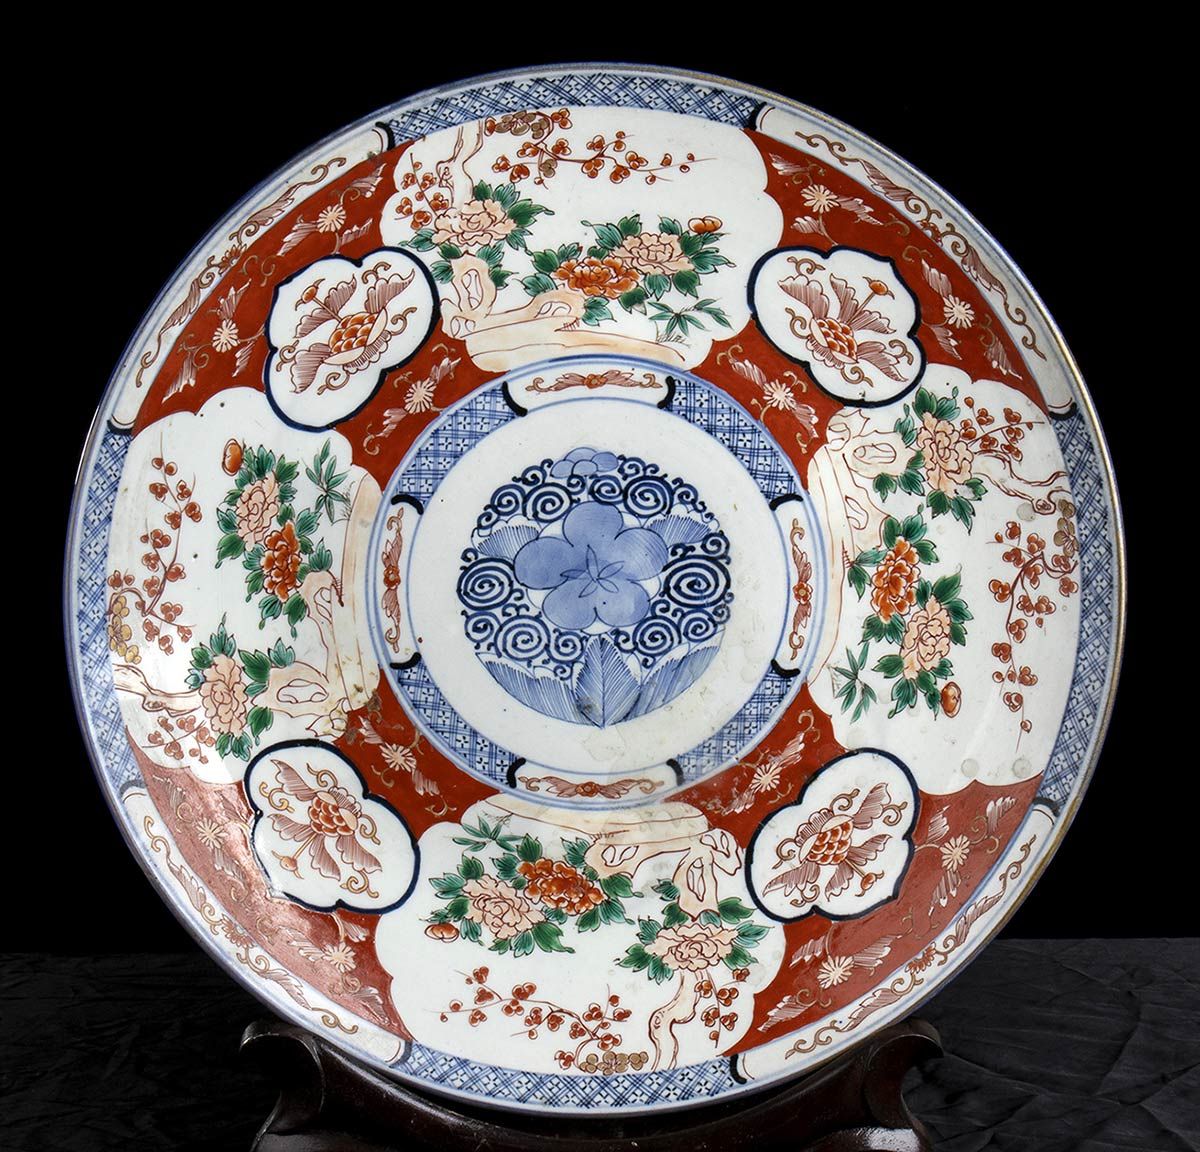 Null 巨大的 "IMARI "瓷盘
日本，明治时期

内有花纹装饰，有叶状轮廓。

直径50厘米